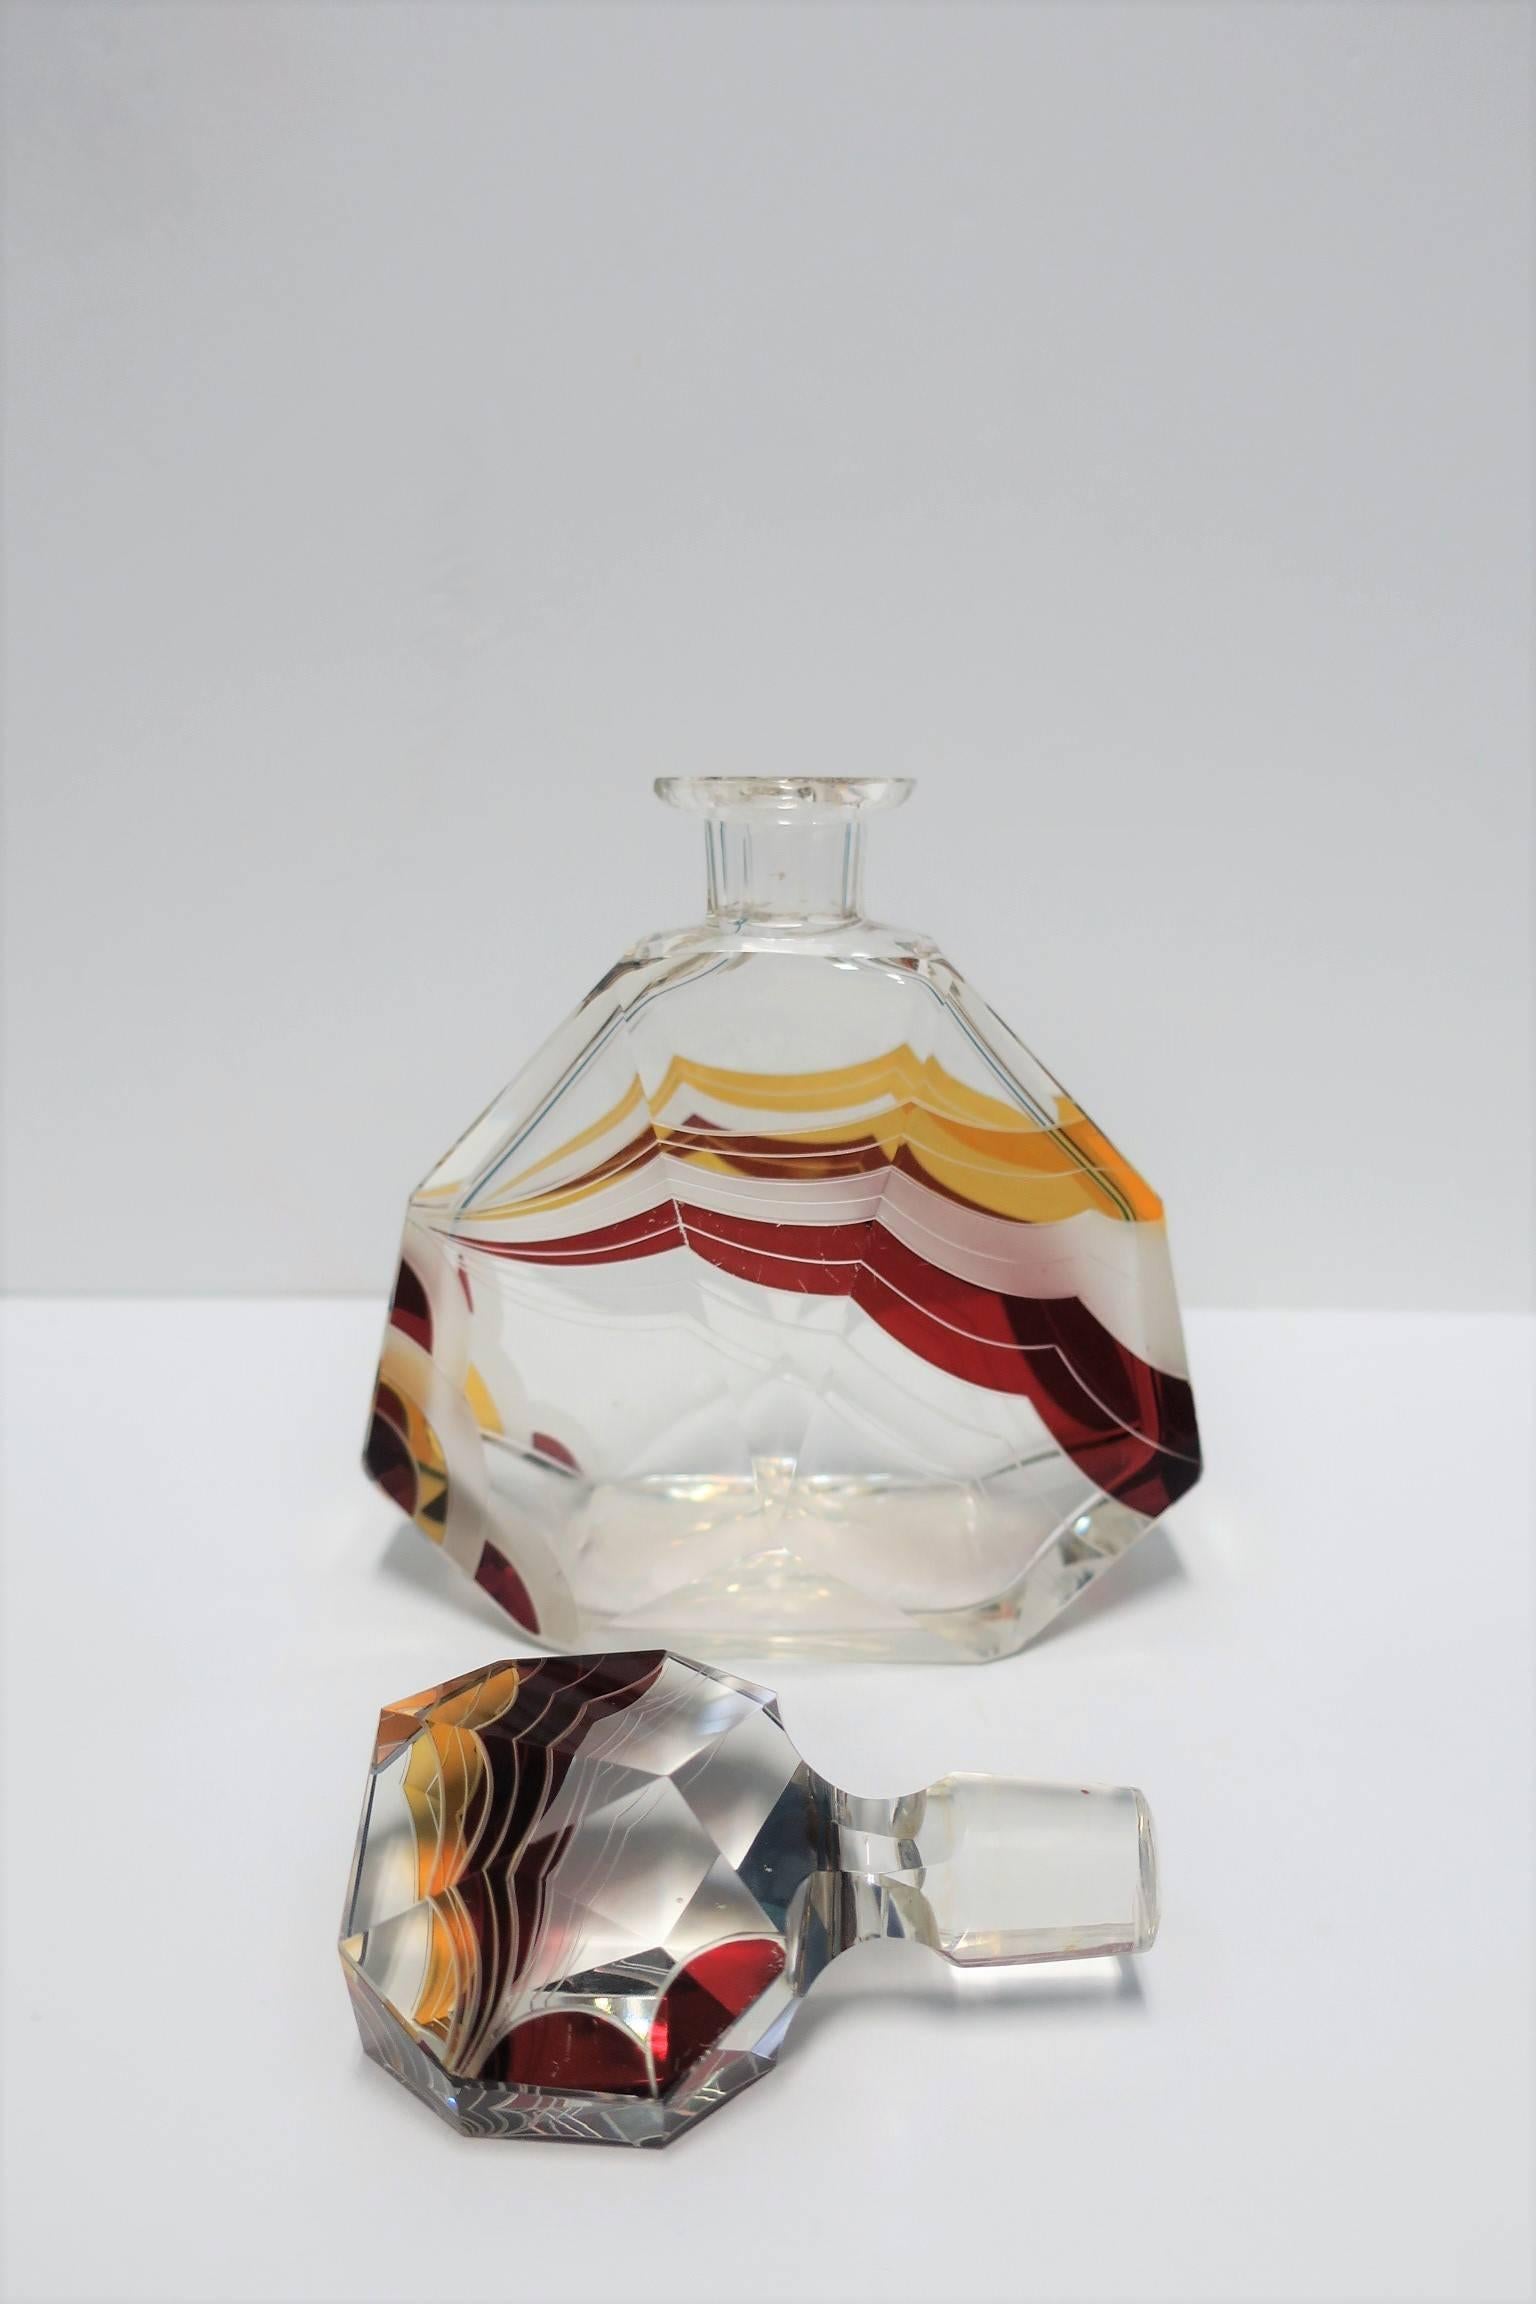 Enameled European Art Deco Liquor or Spirits Crystal Decanter by Designer Karl Palda